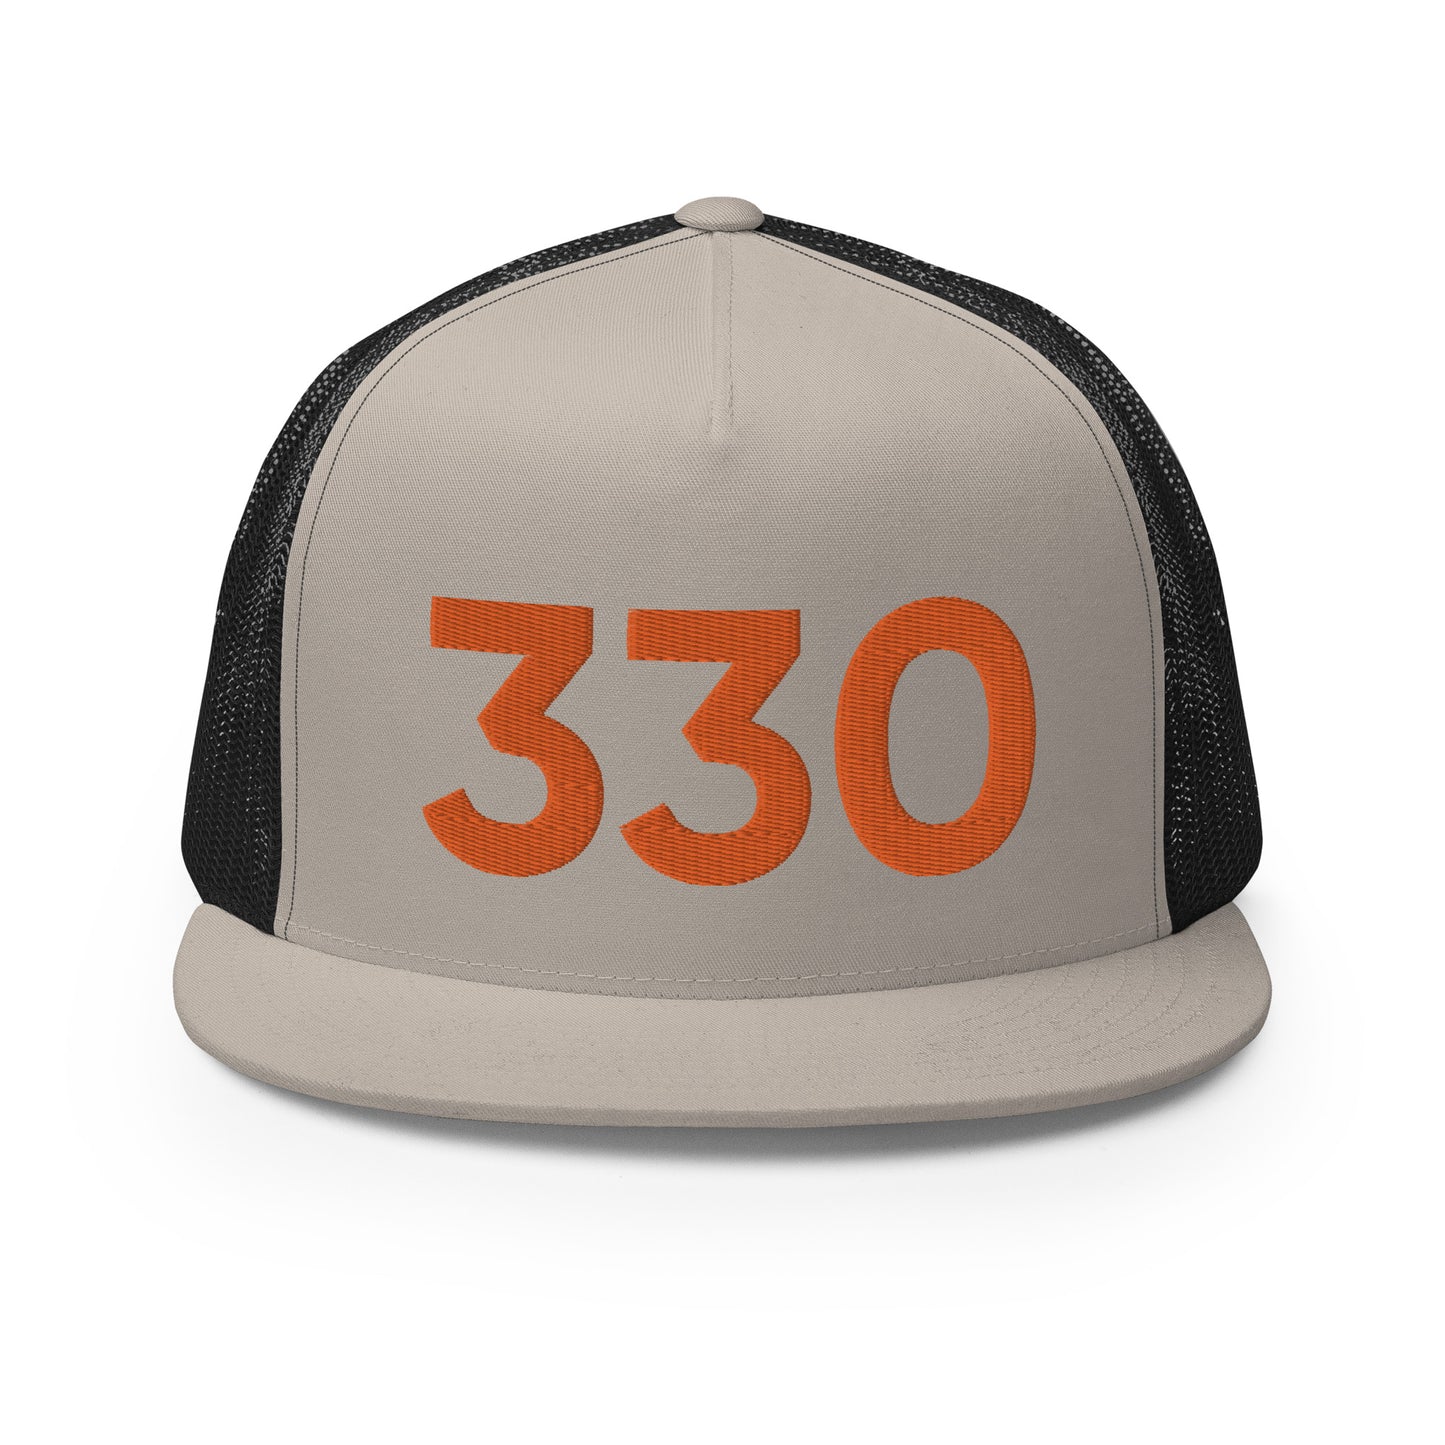 330 Cleveland Proud Trucker Hat